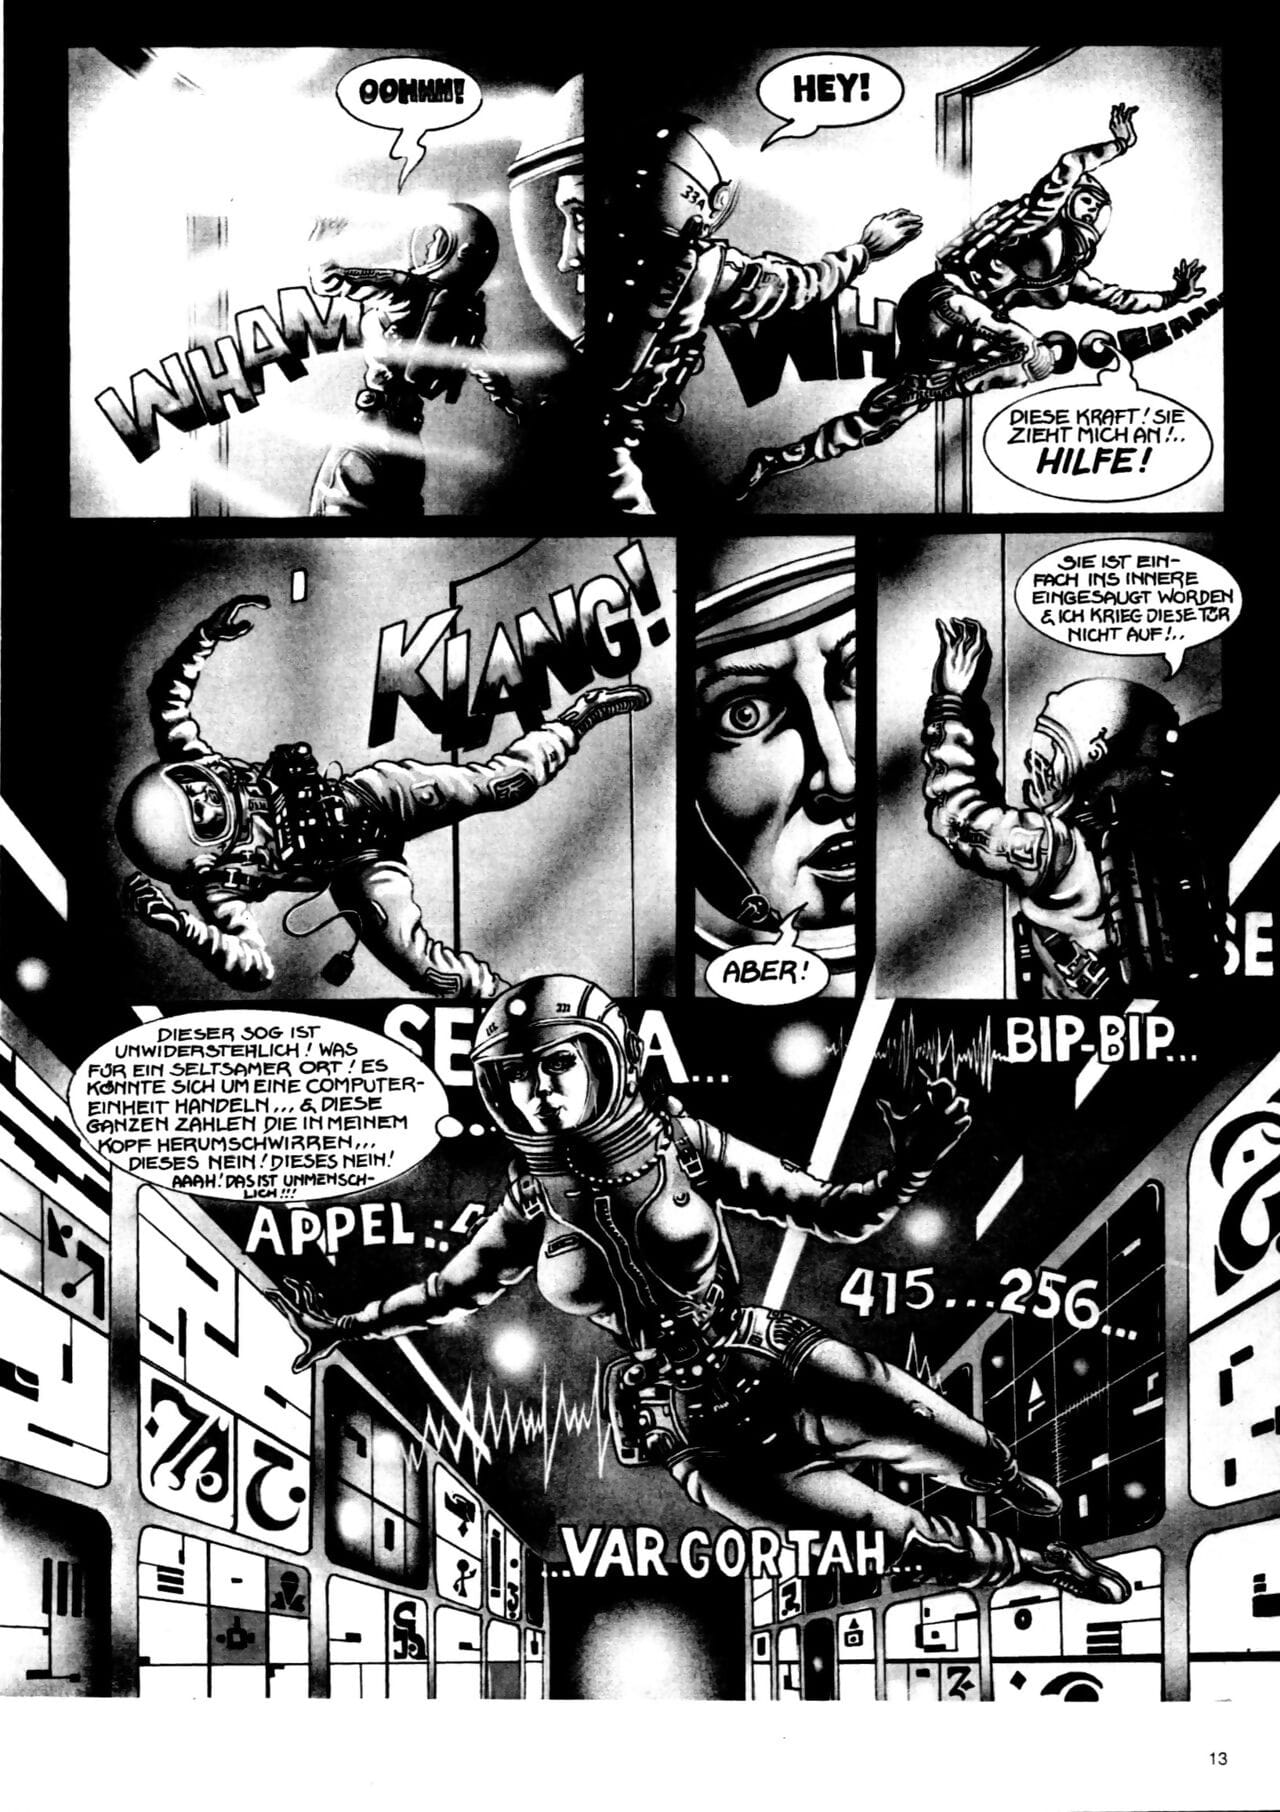 schwermetall #006 page 1